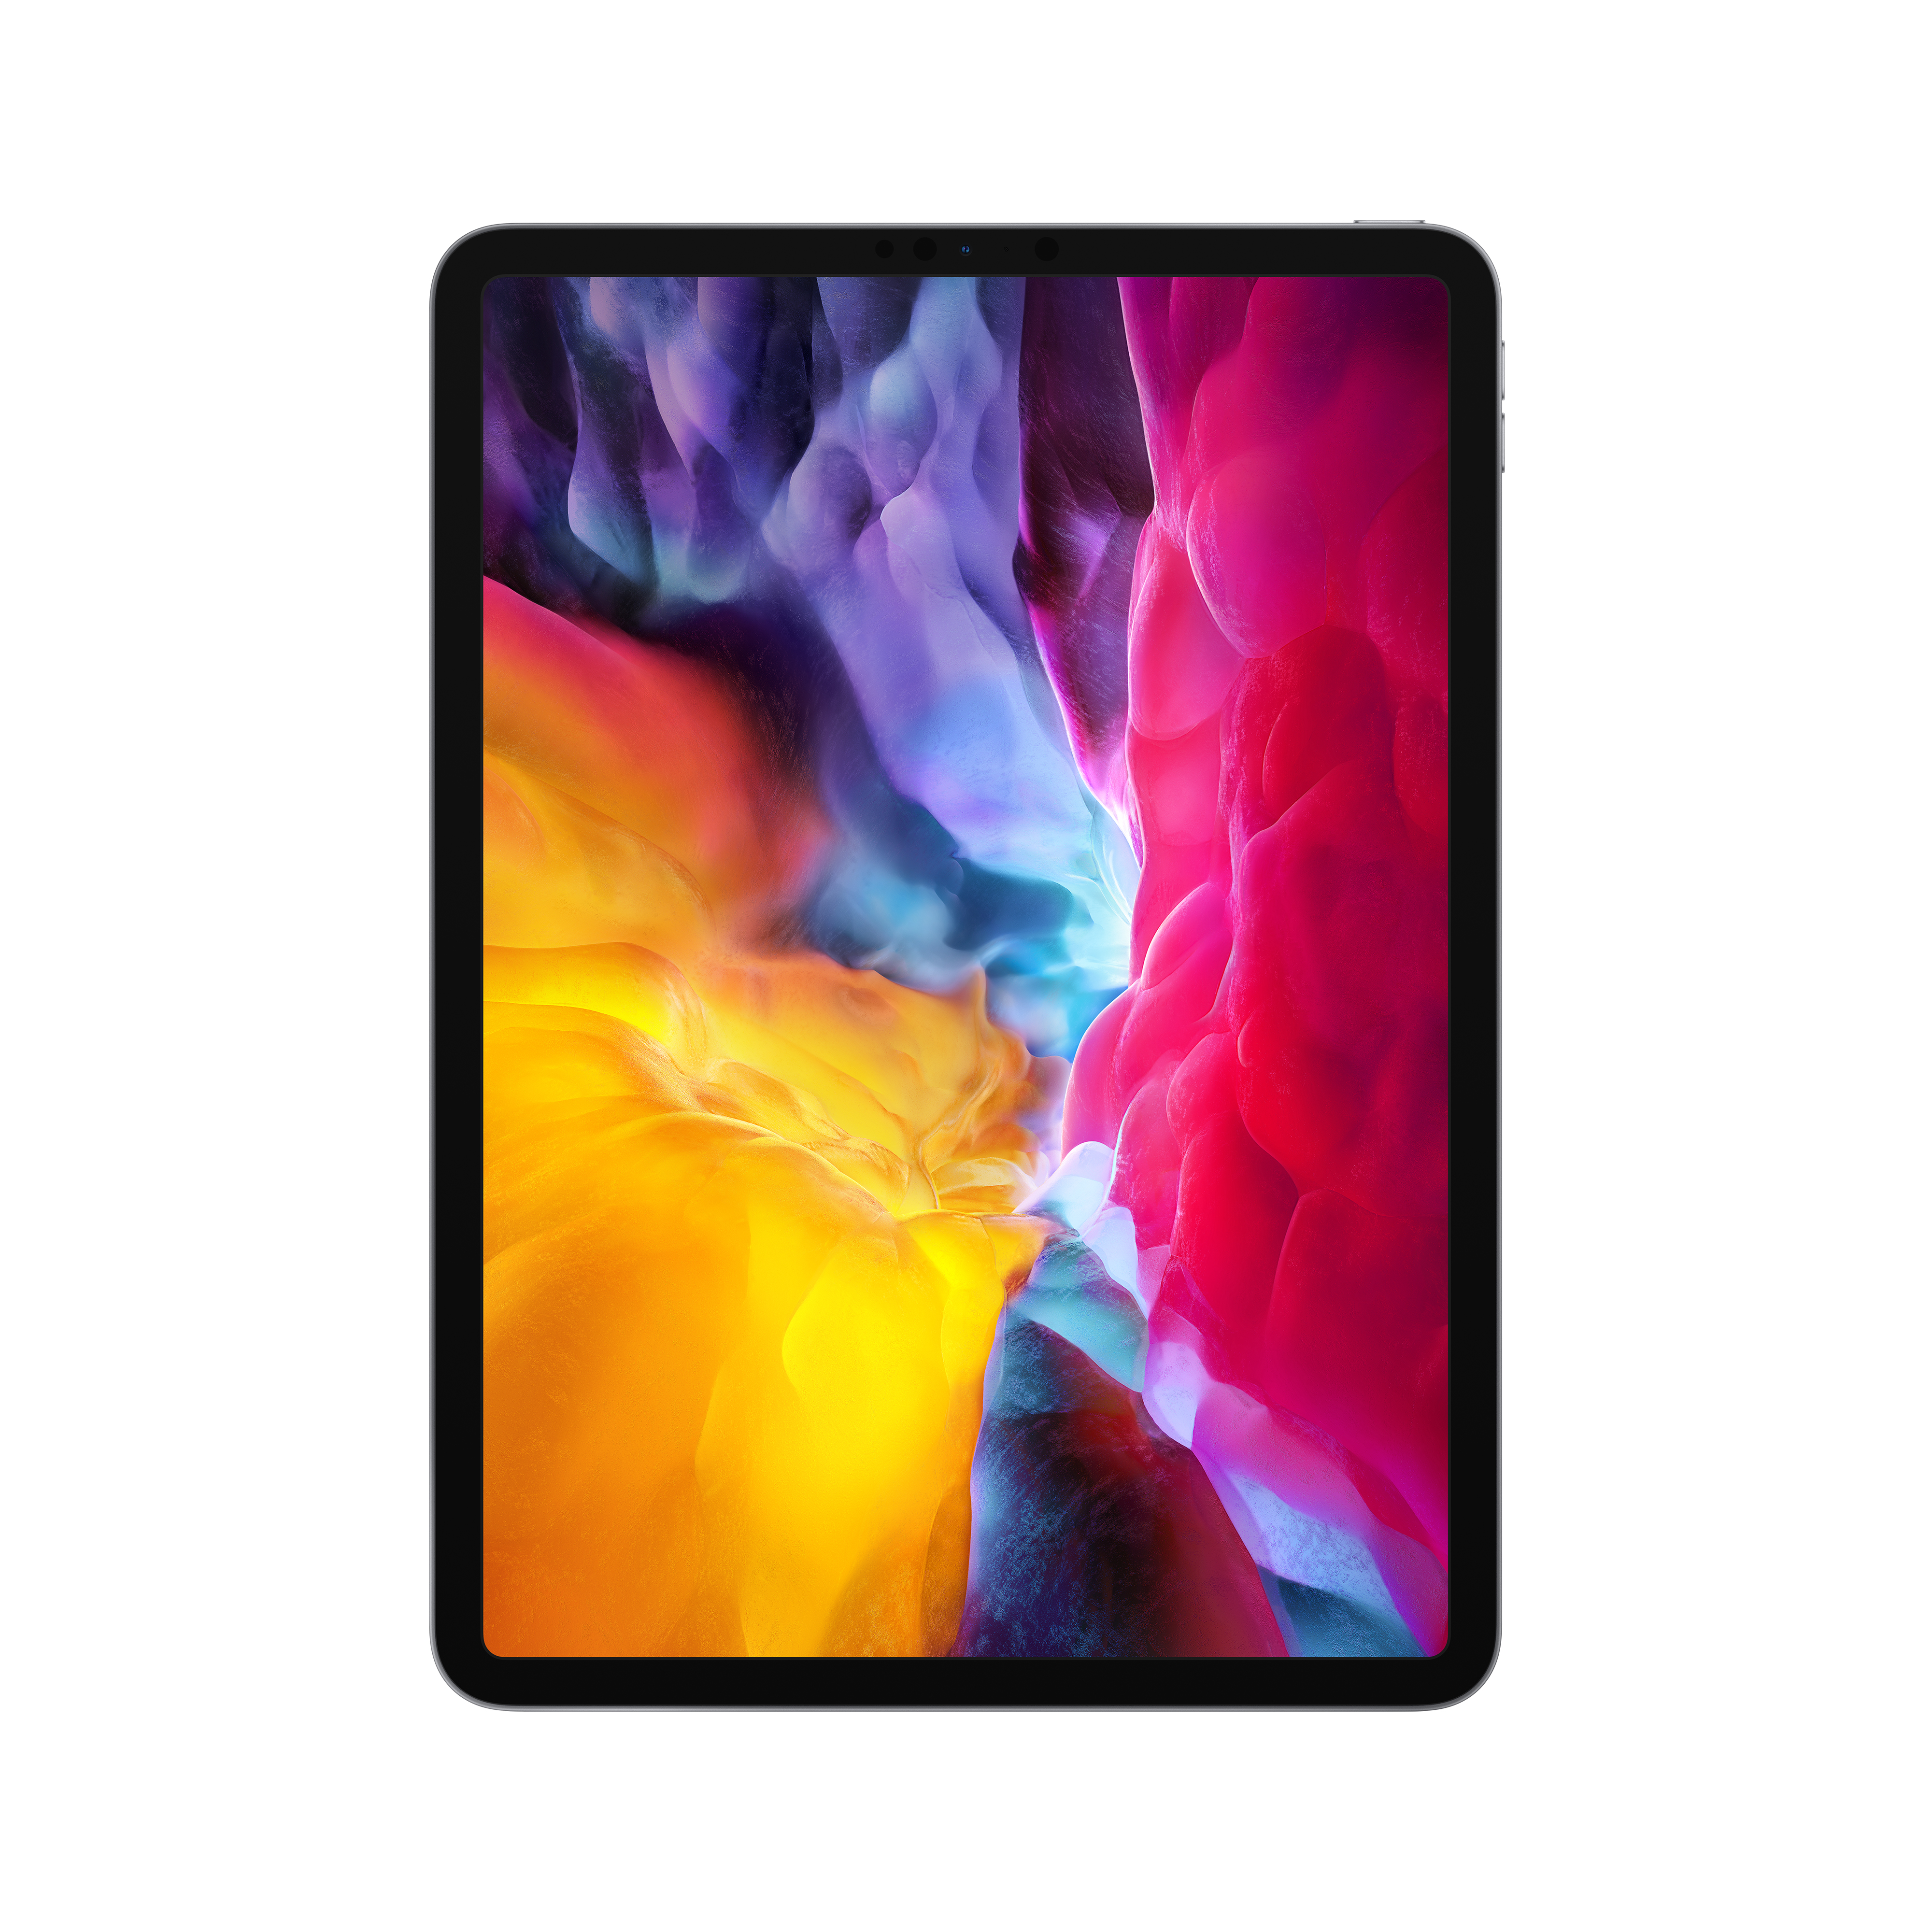 Apple 11-inch iPad Pro (2020) Wi-Fi 256GB - Space Gray - image 4 of 10